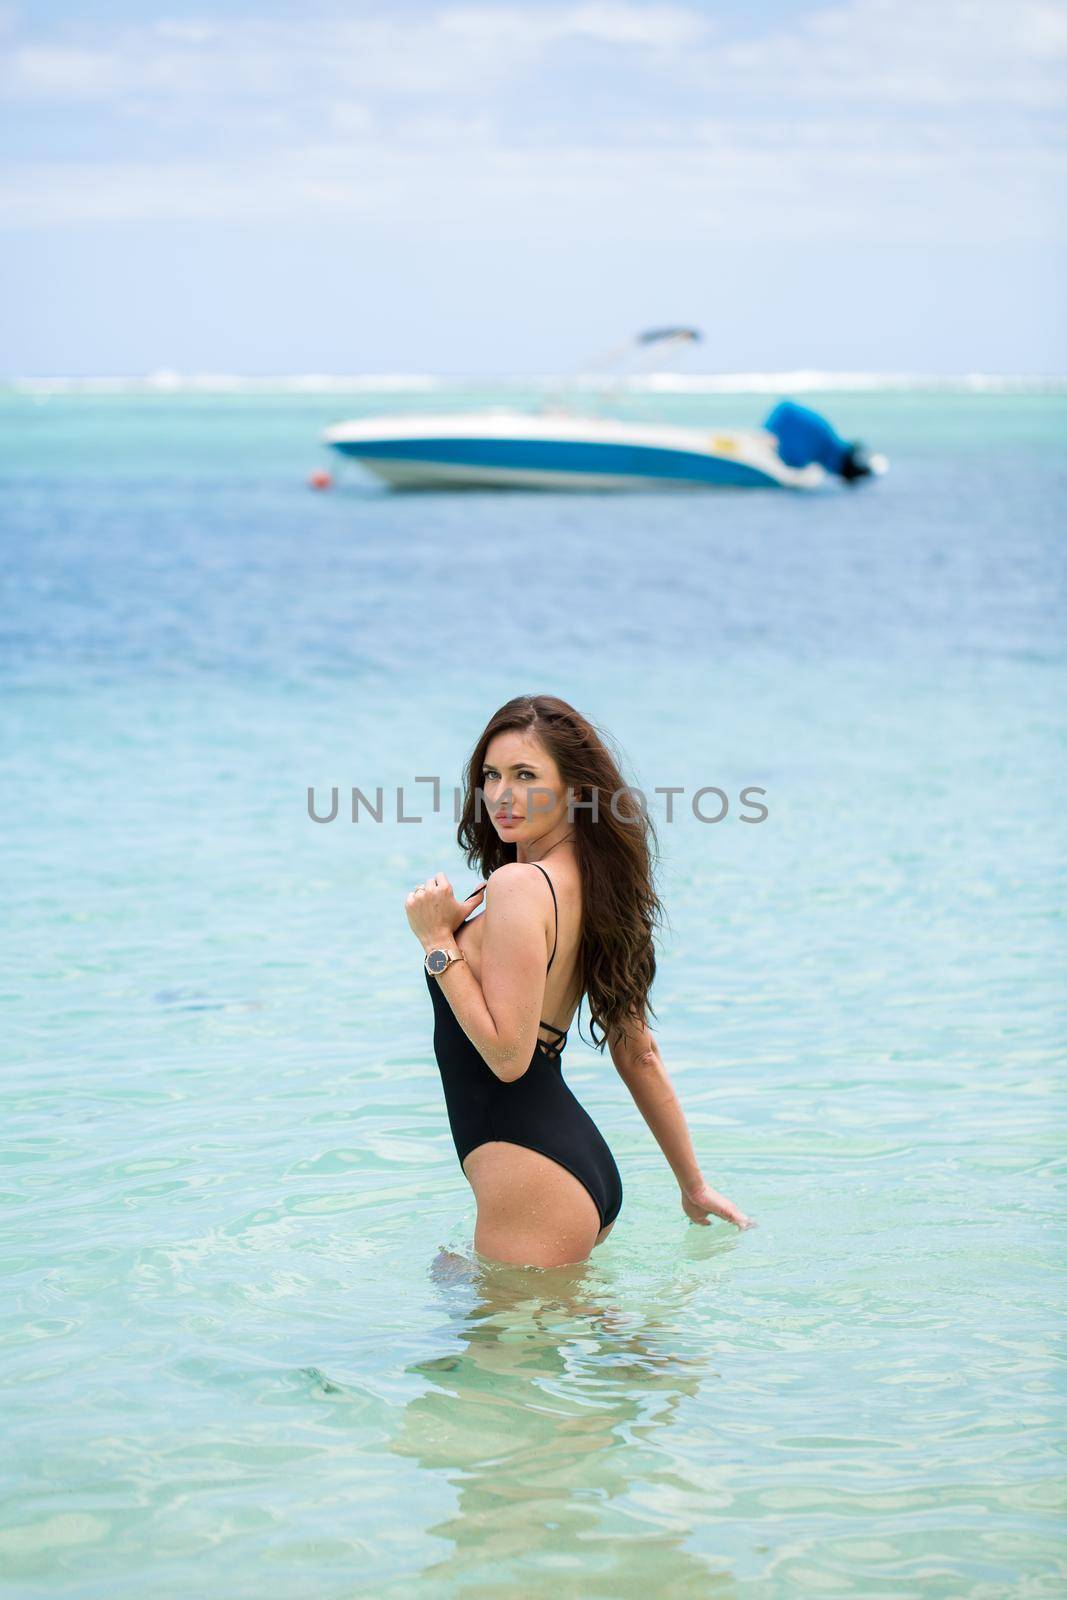 Sexy beach model woman having fun swimming in ocean. by StudioPeace